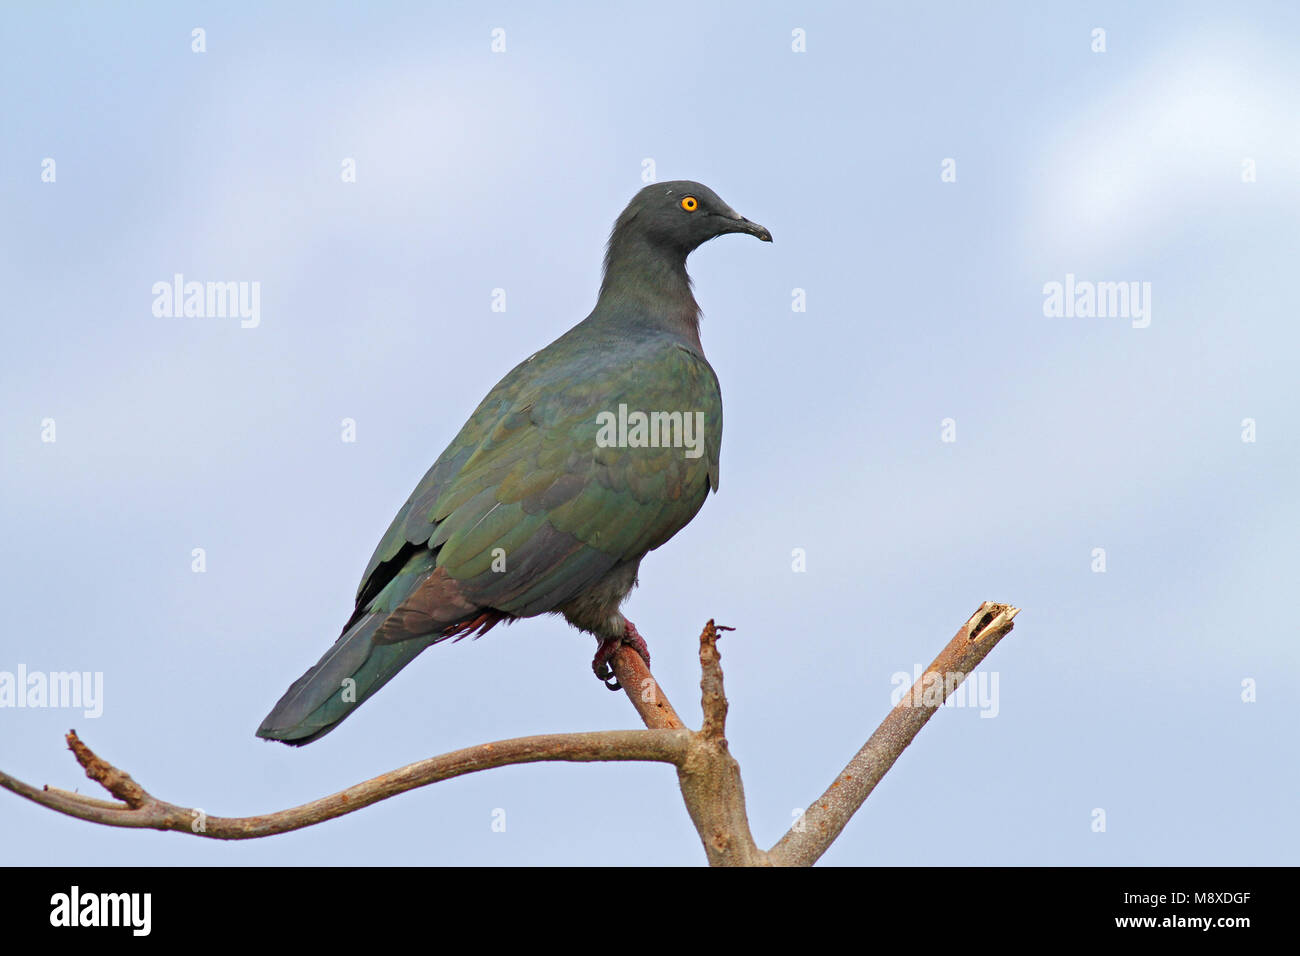 Whartons Muskaatduif, Christmas Island Imperial-Pigeon Stock Photo